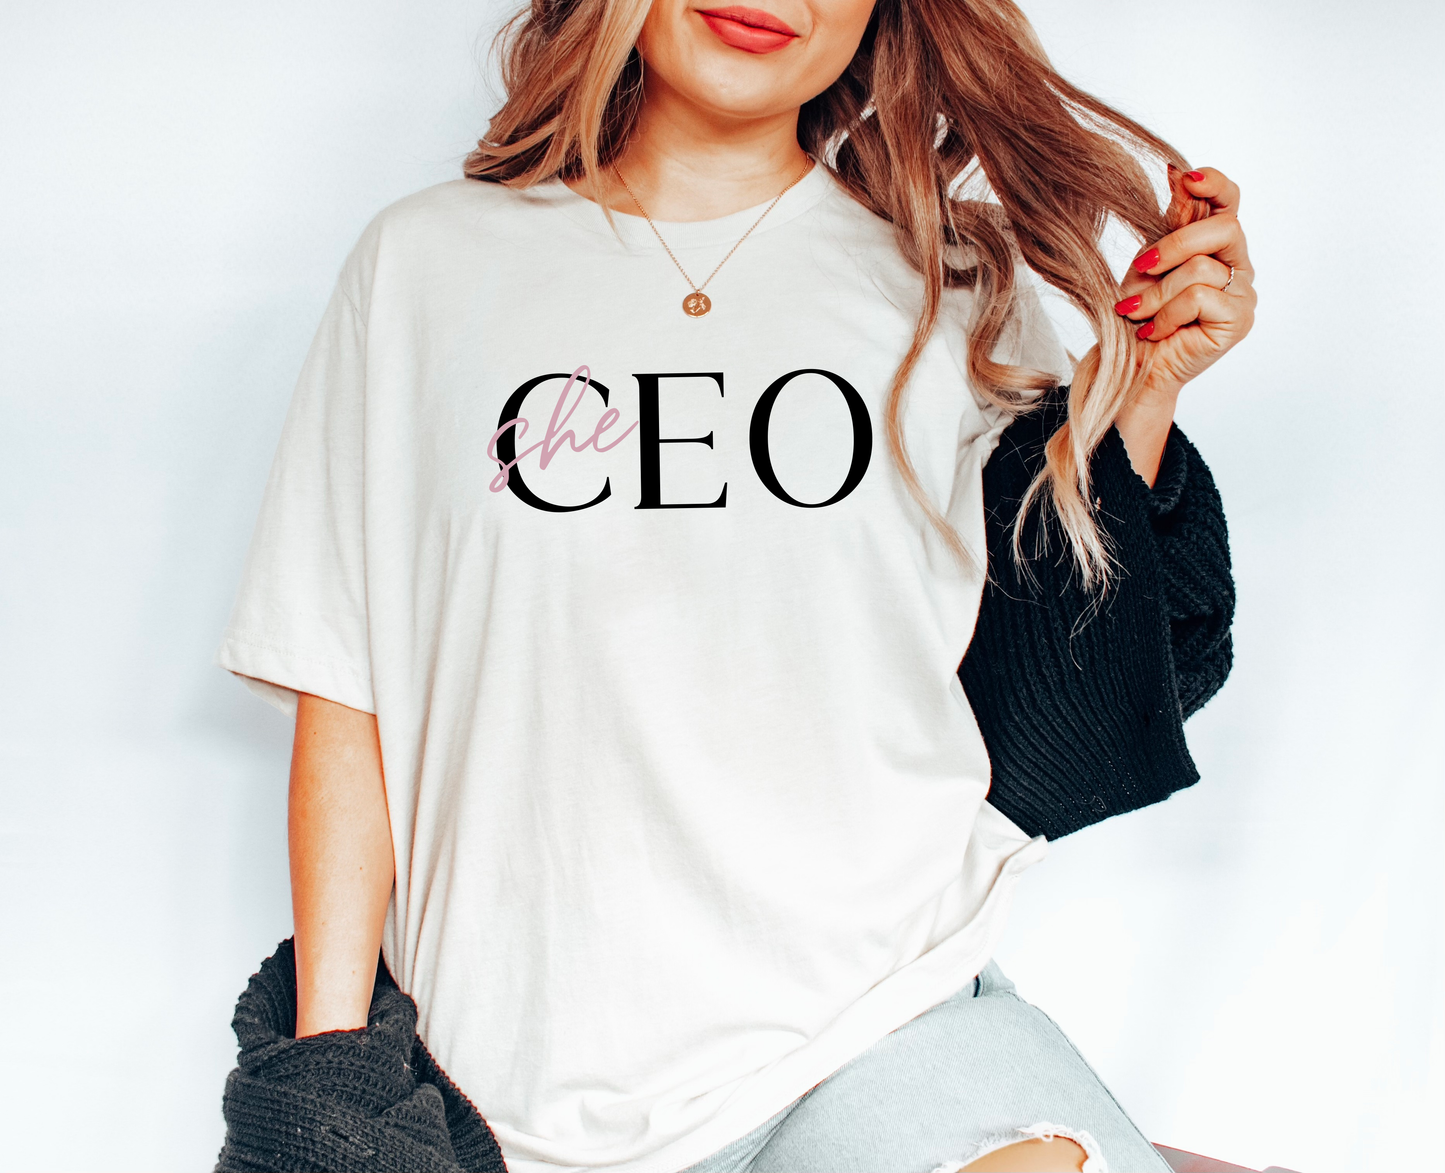 She CEO Tee